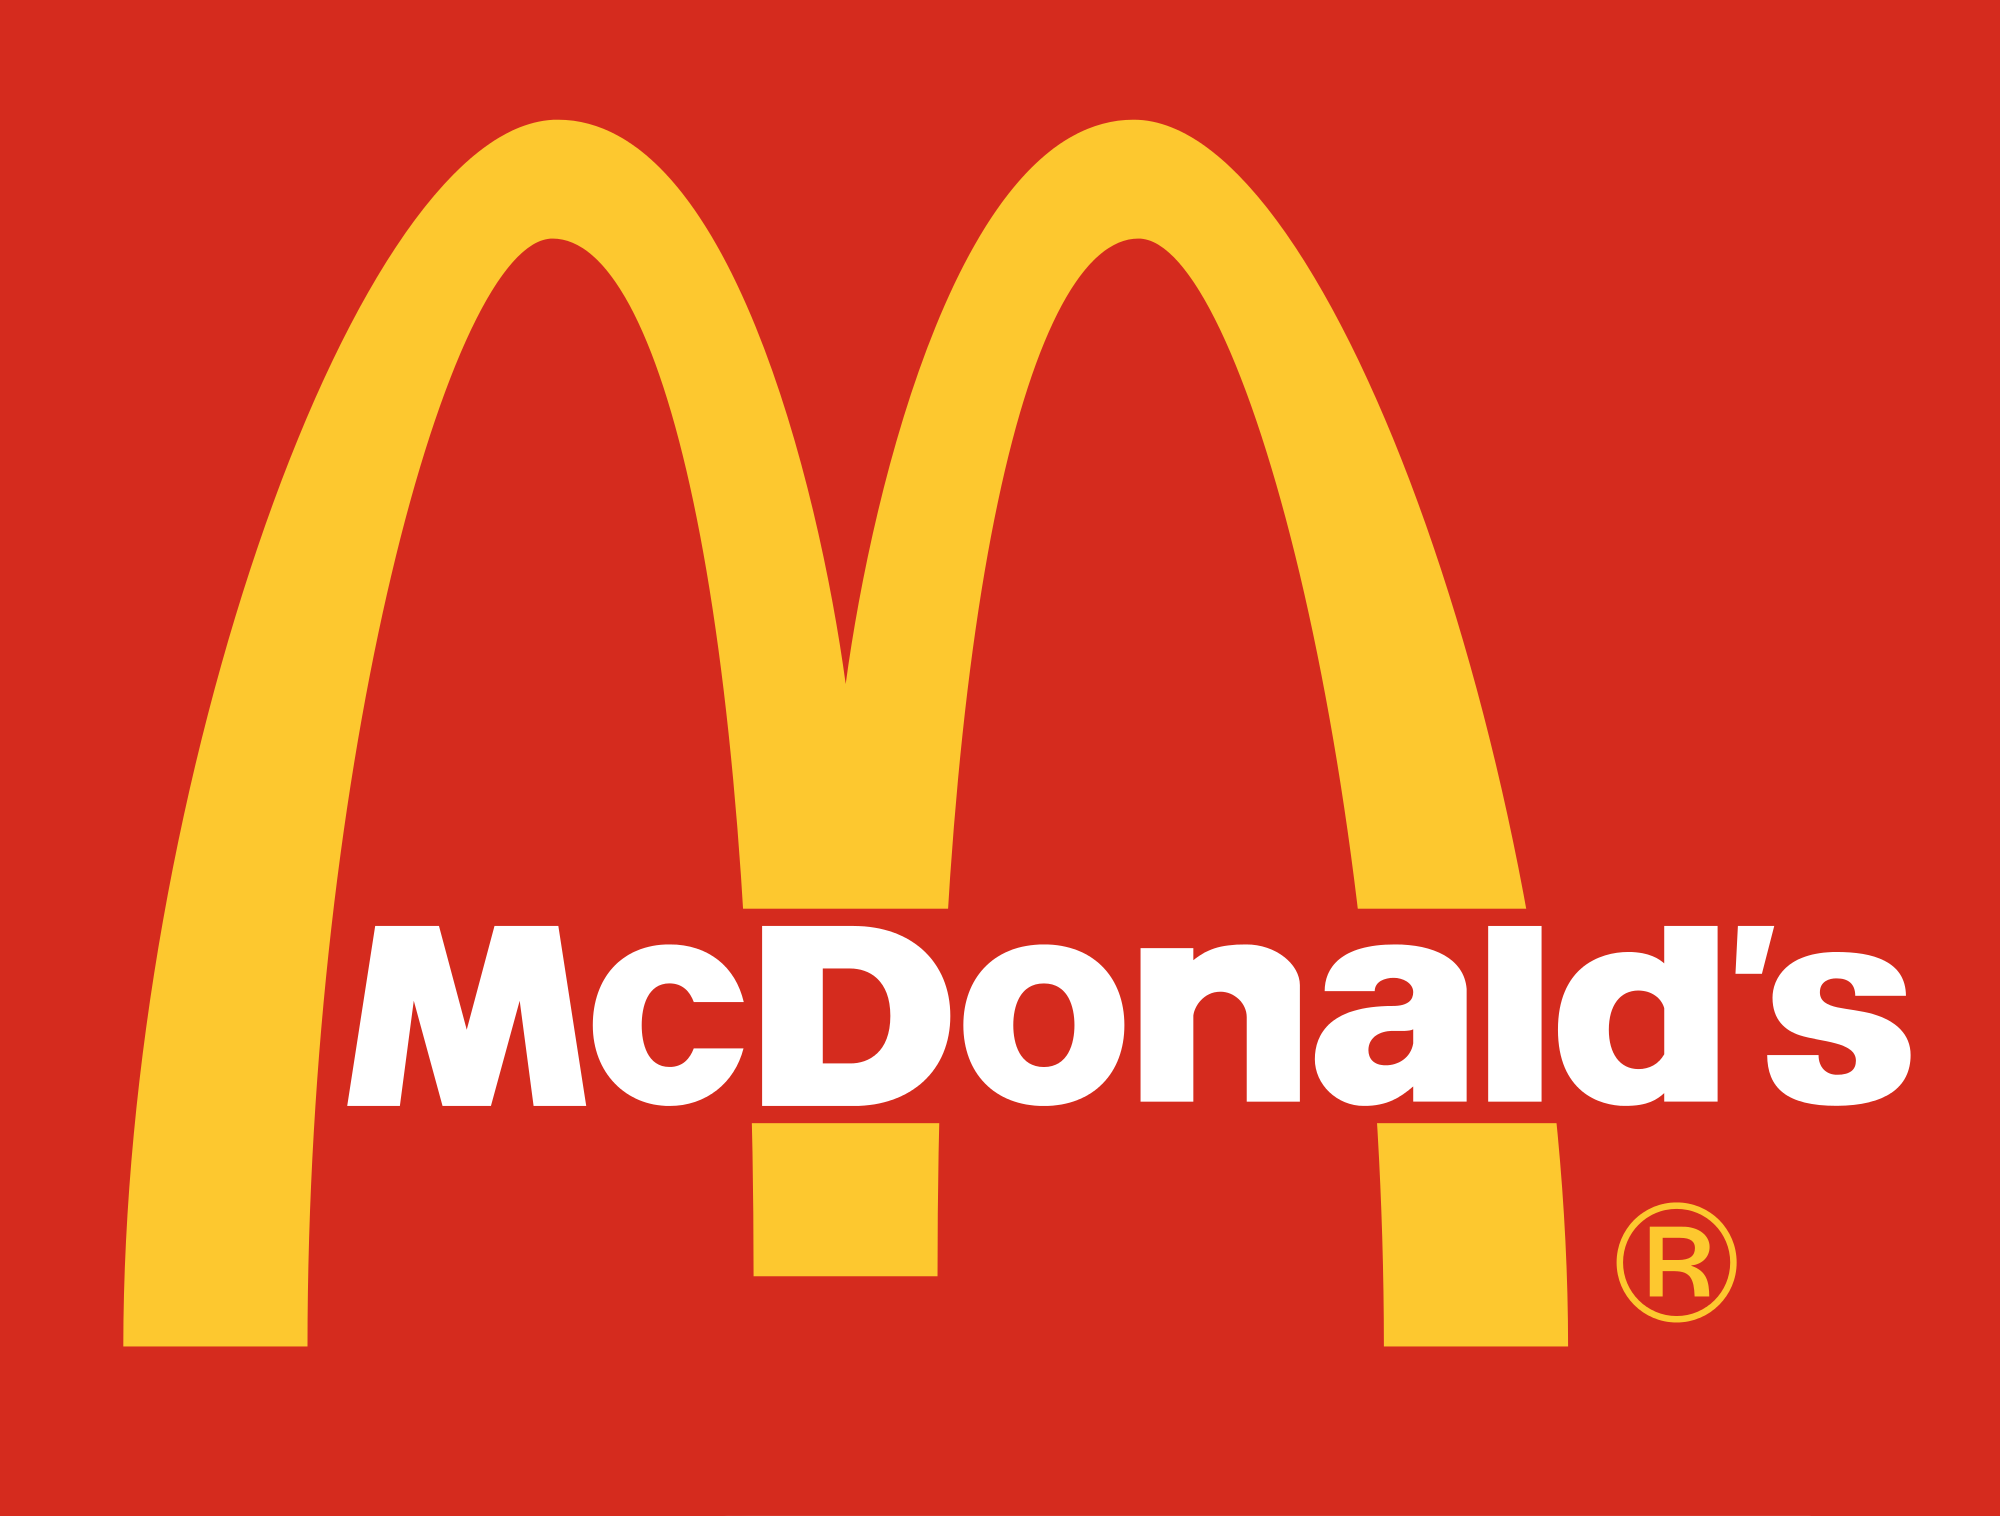 McDonalds Logo, McDonalds Symbol Meaning, History and Evolution